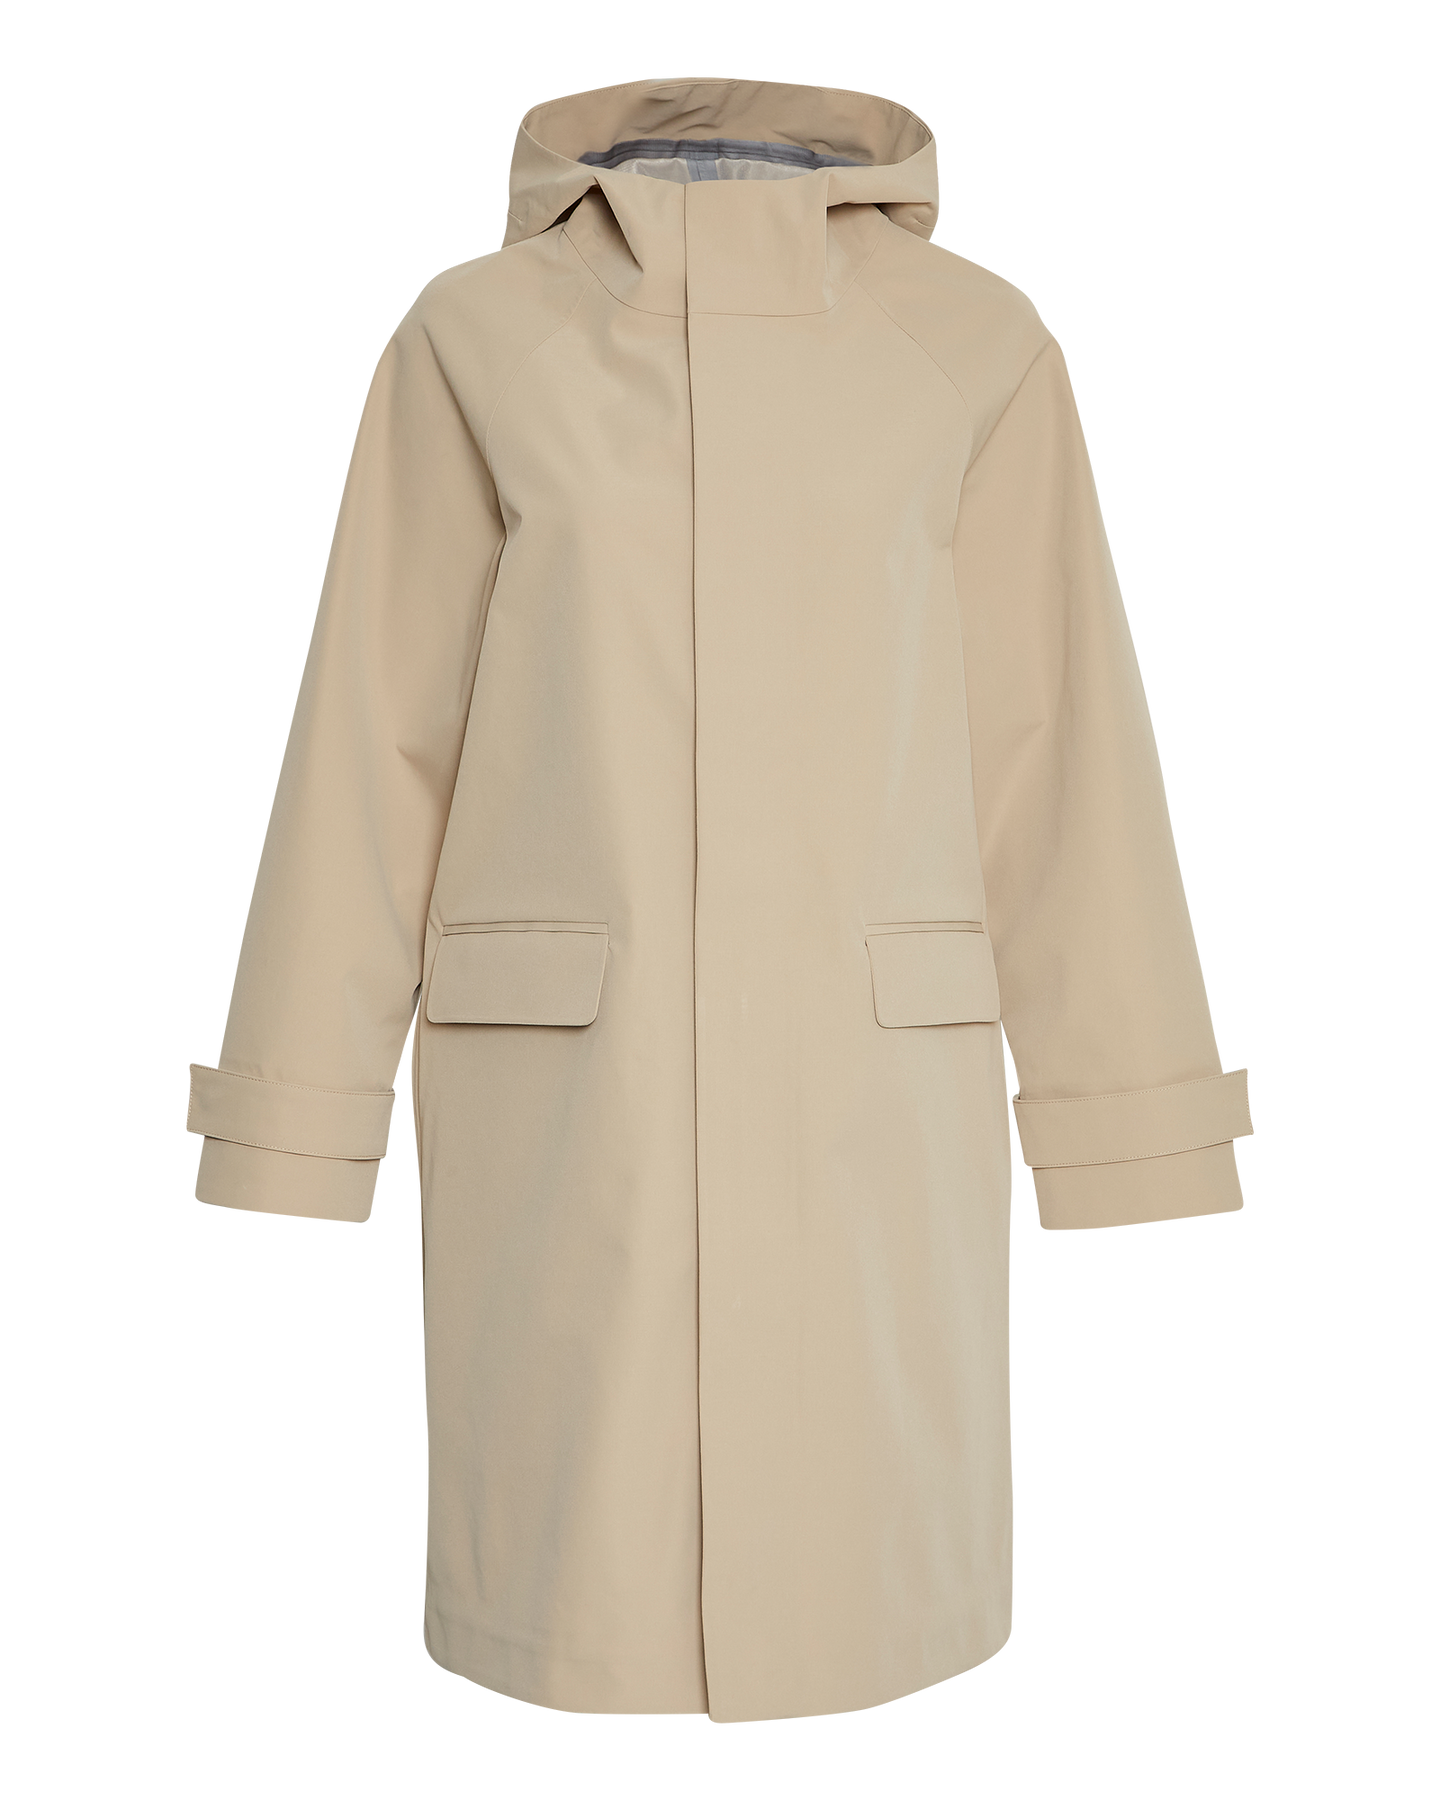 Malan Hood Raincoat - Trench Coat